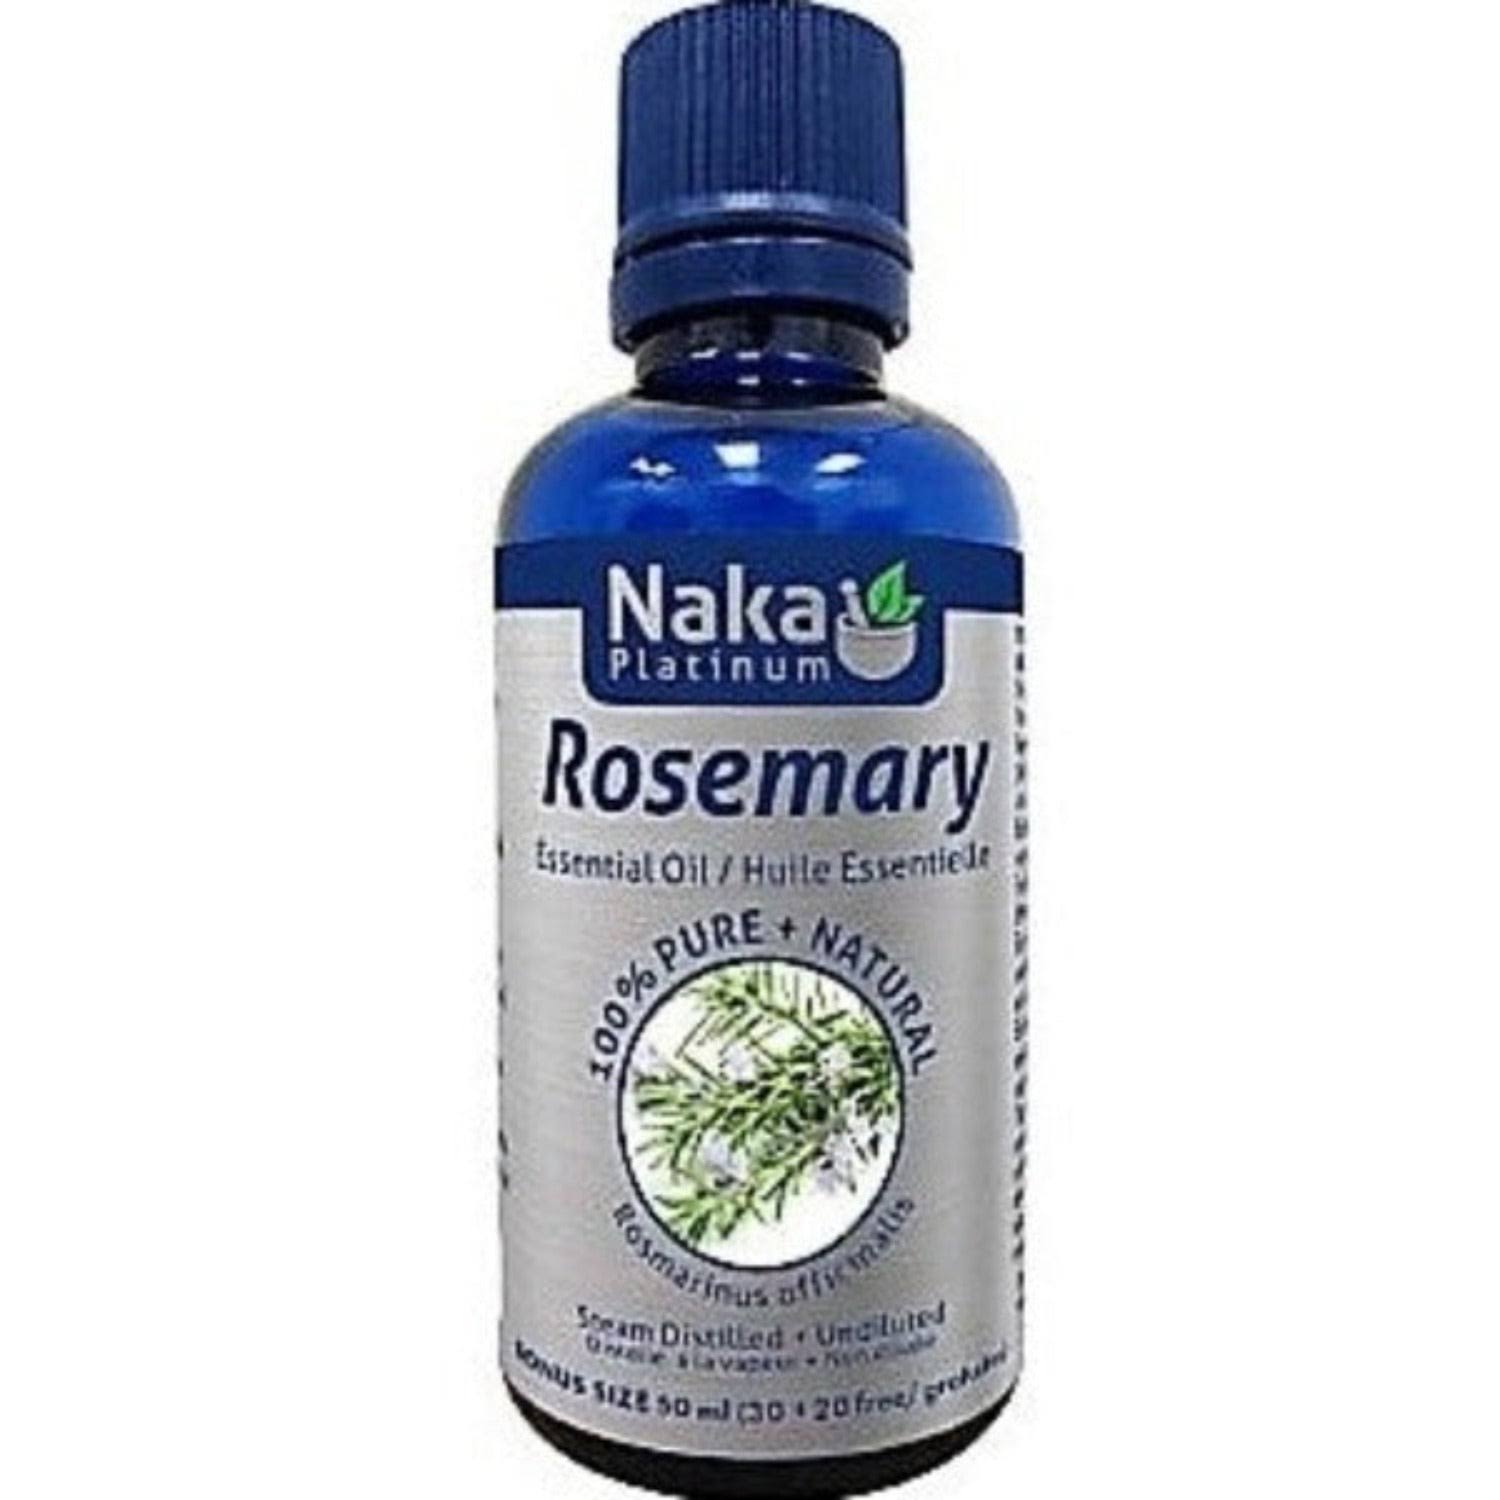 Naka Platinum Rosemary Essential Oil 50ml